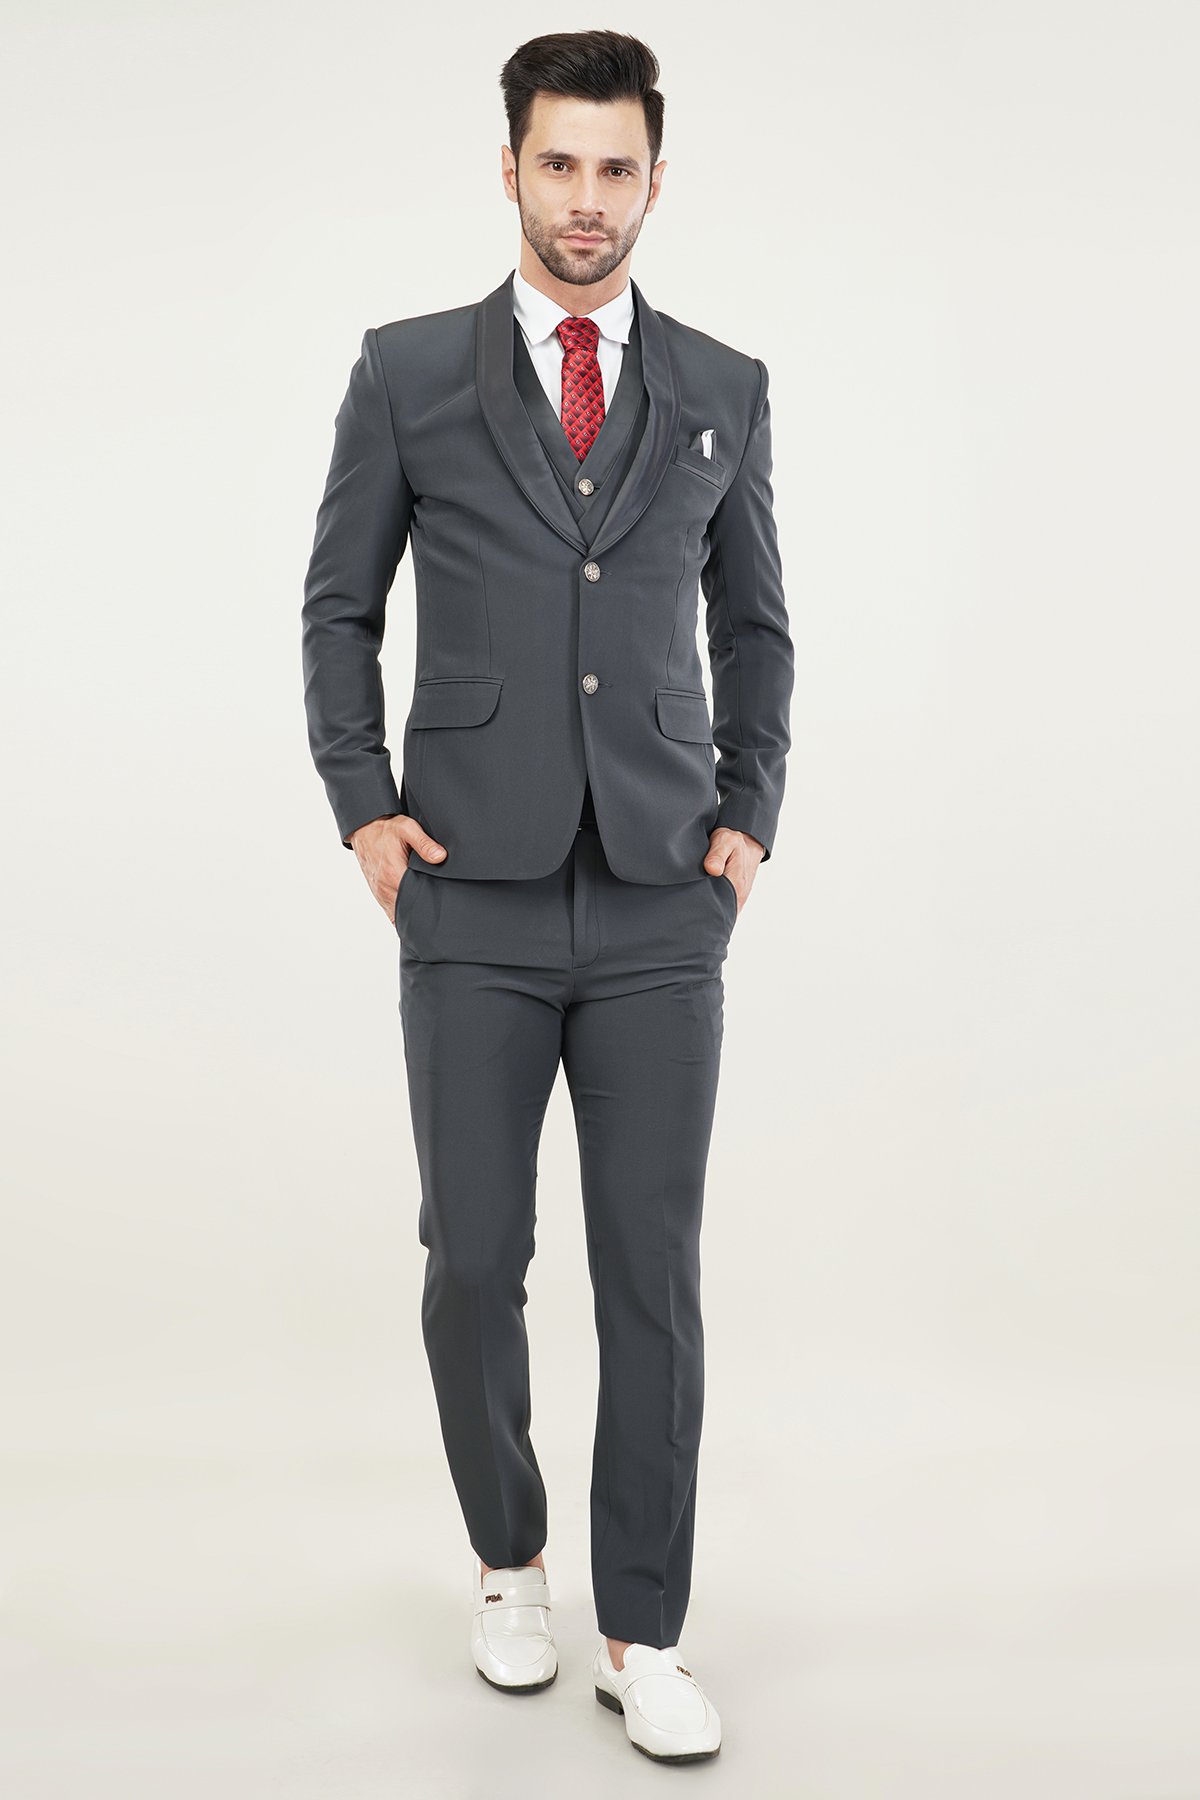 Men’s Grey Tuxedo 3 Piece Suits Wedding Groomsmen Fashion Suits